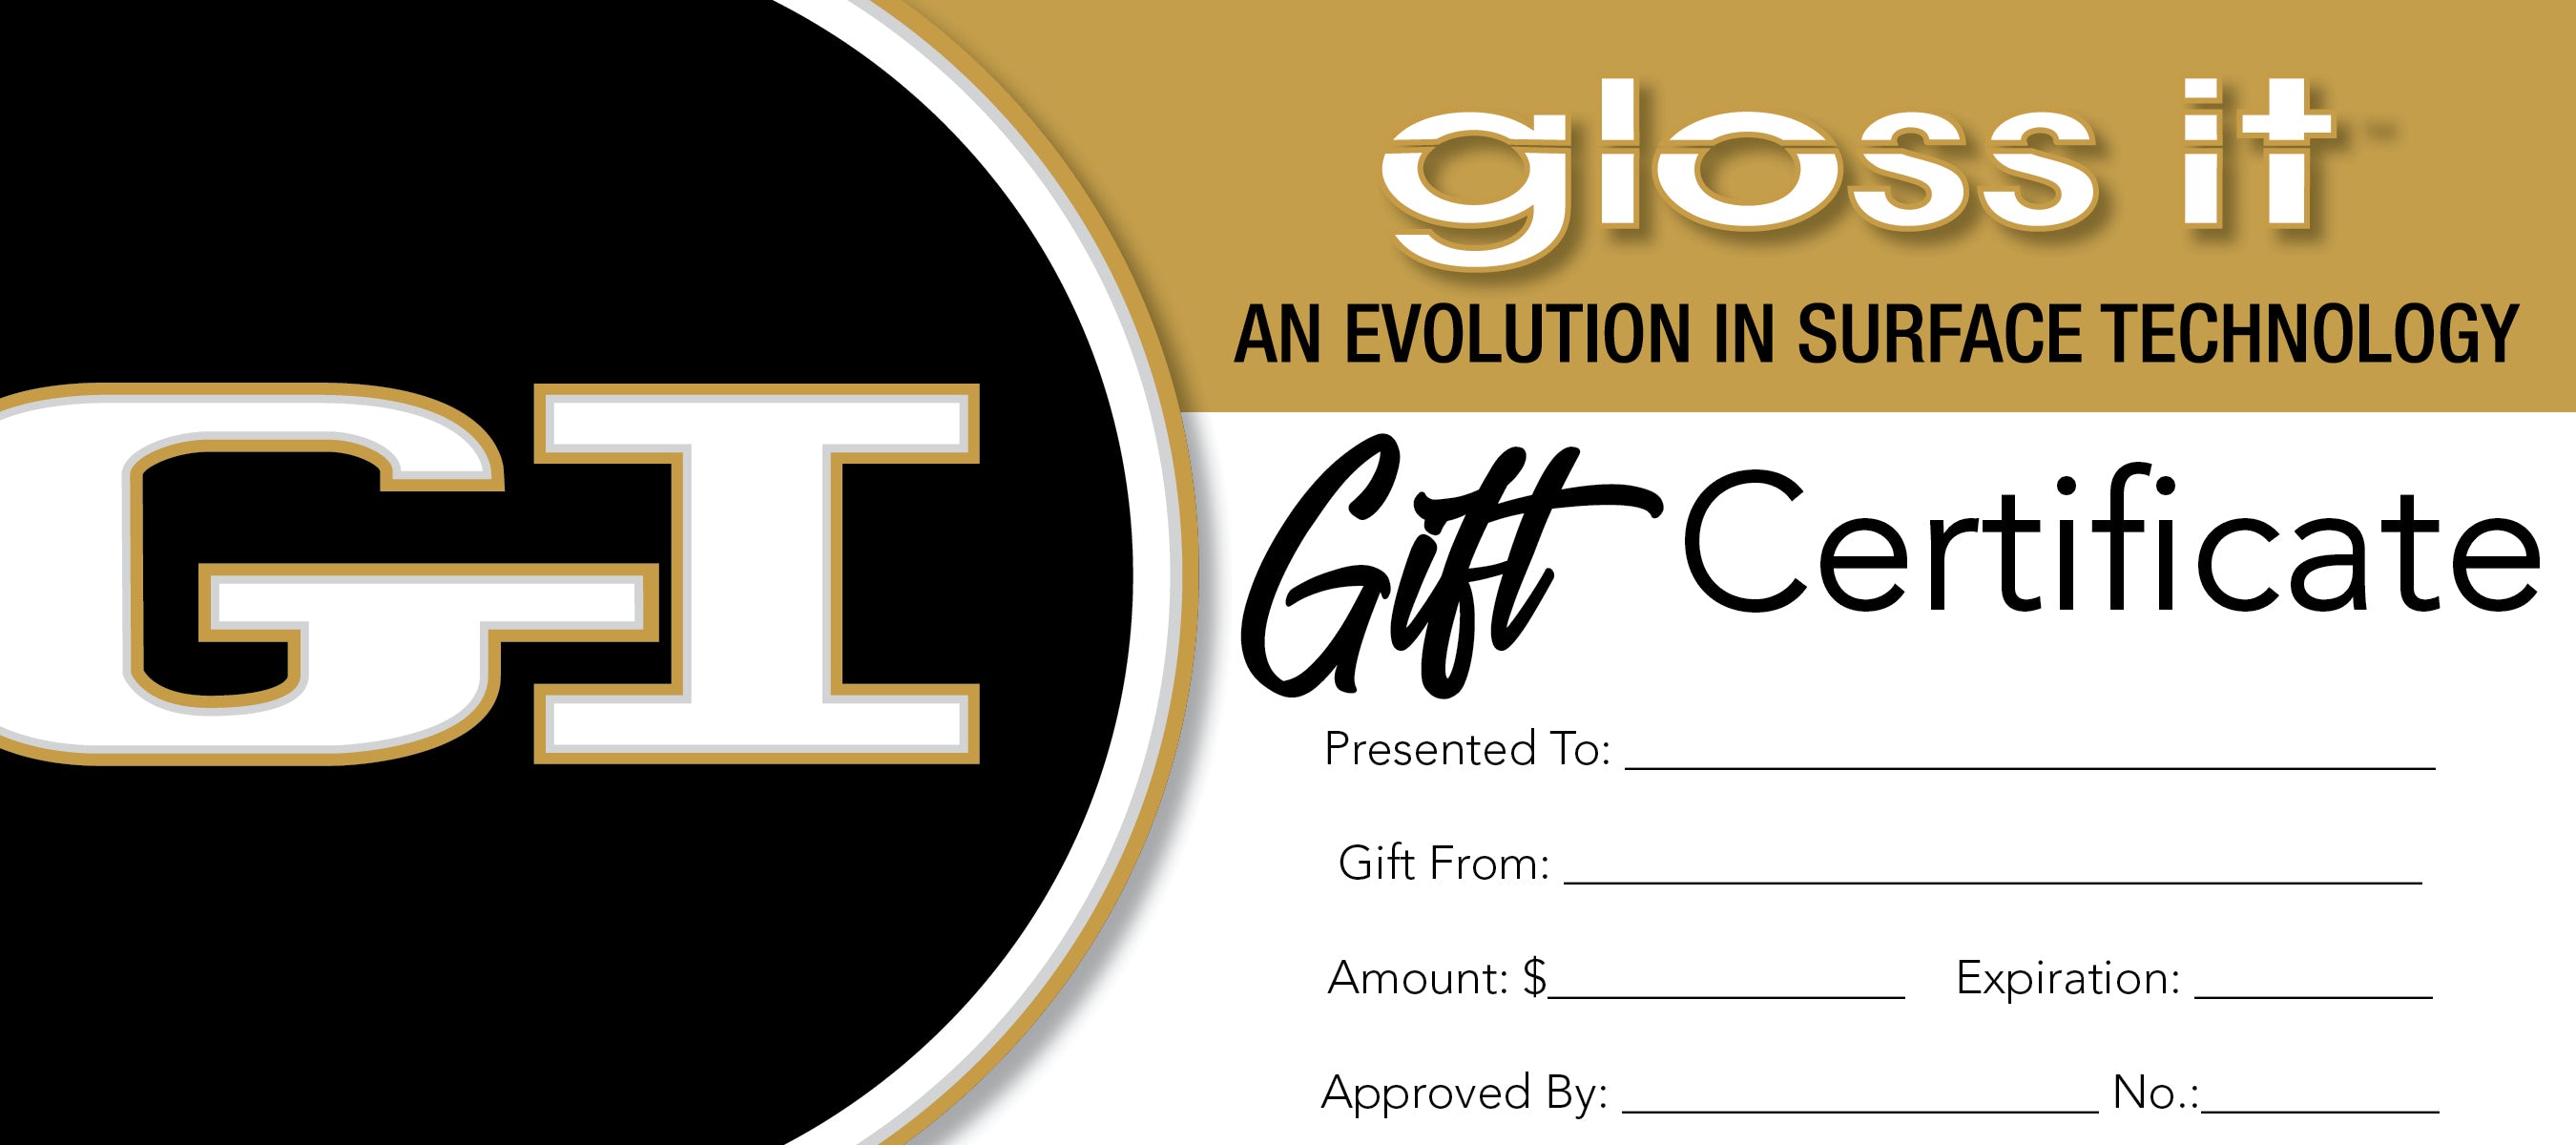 Gloss-It Gift Certificate